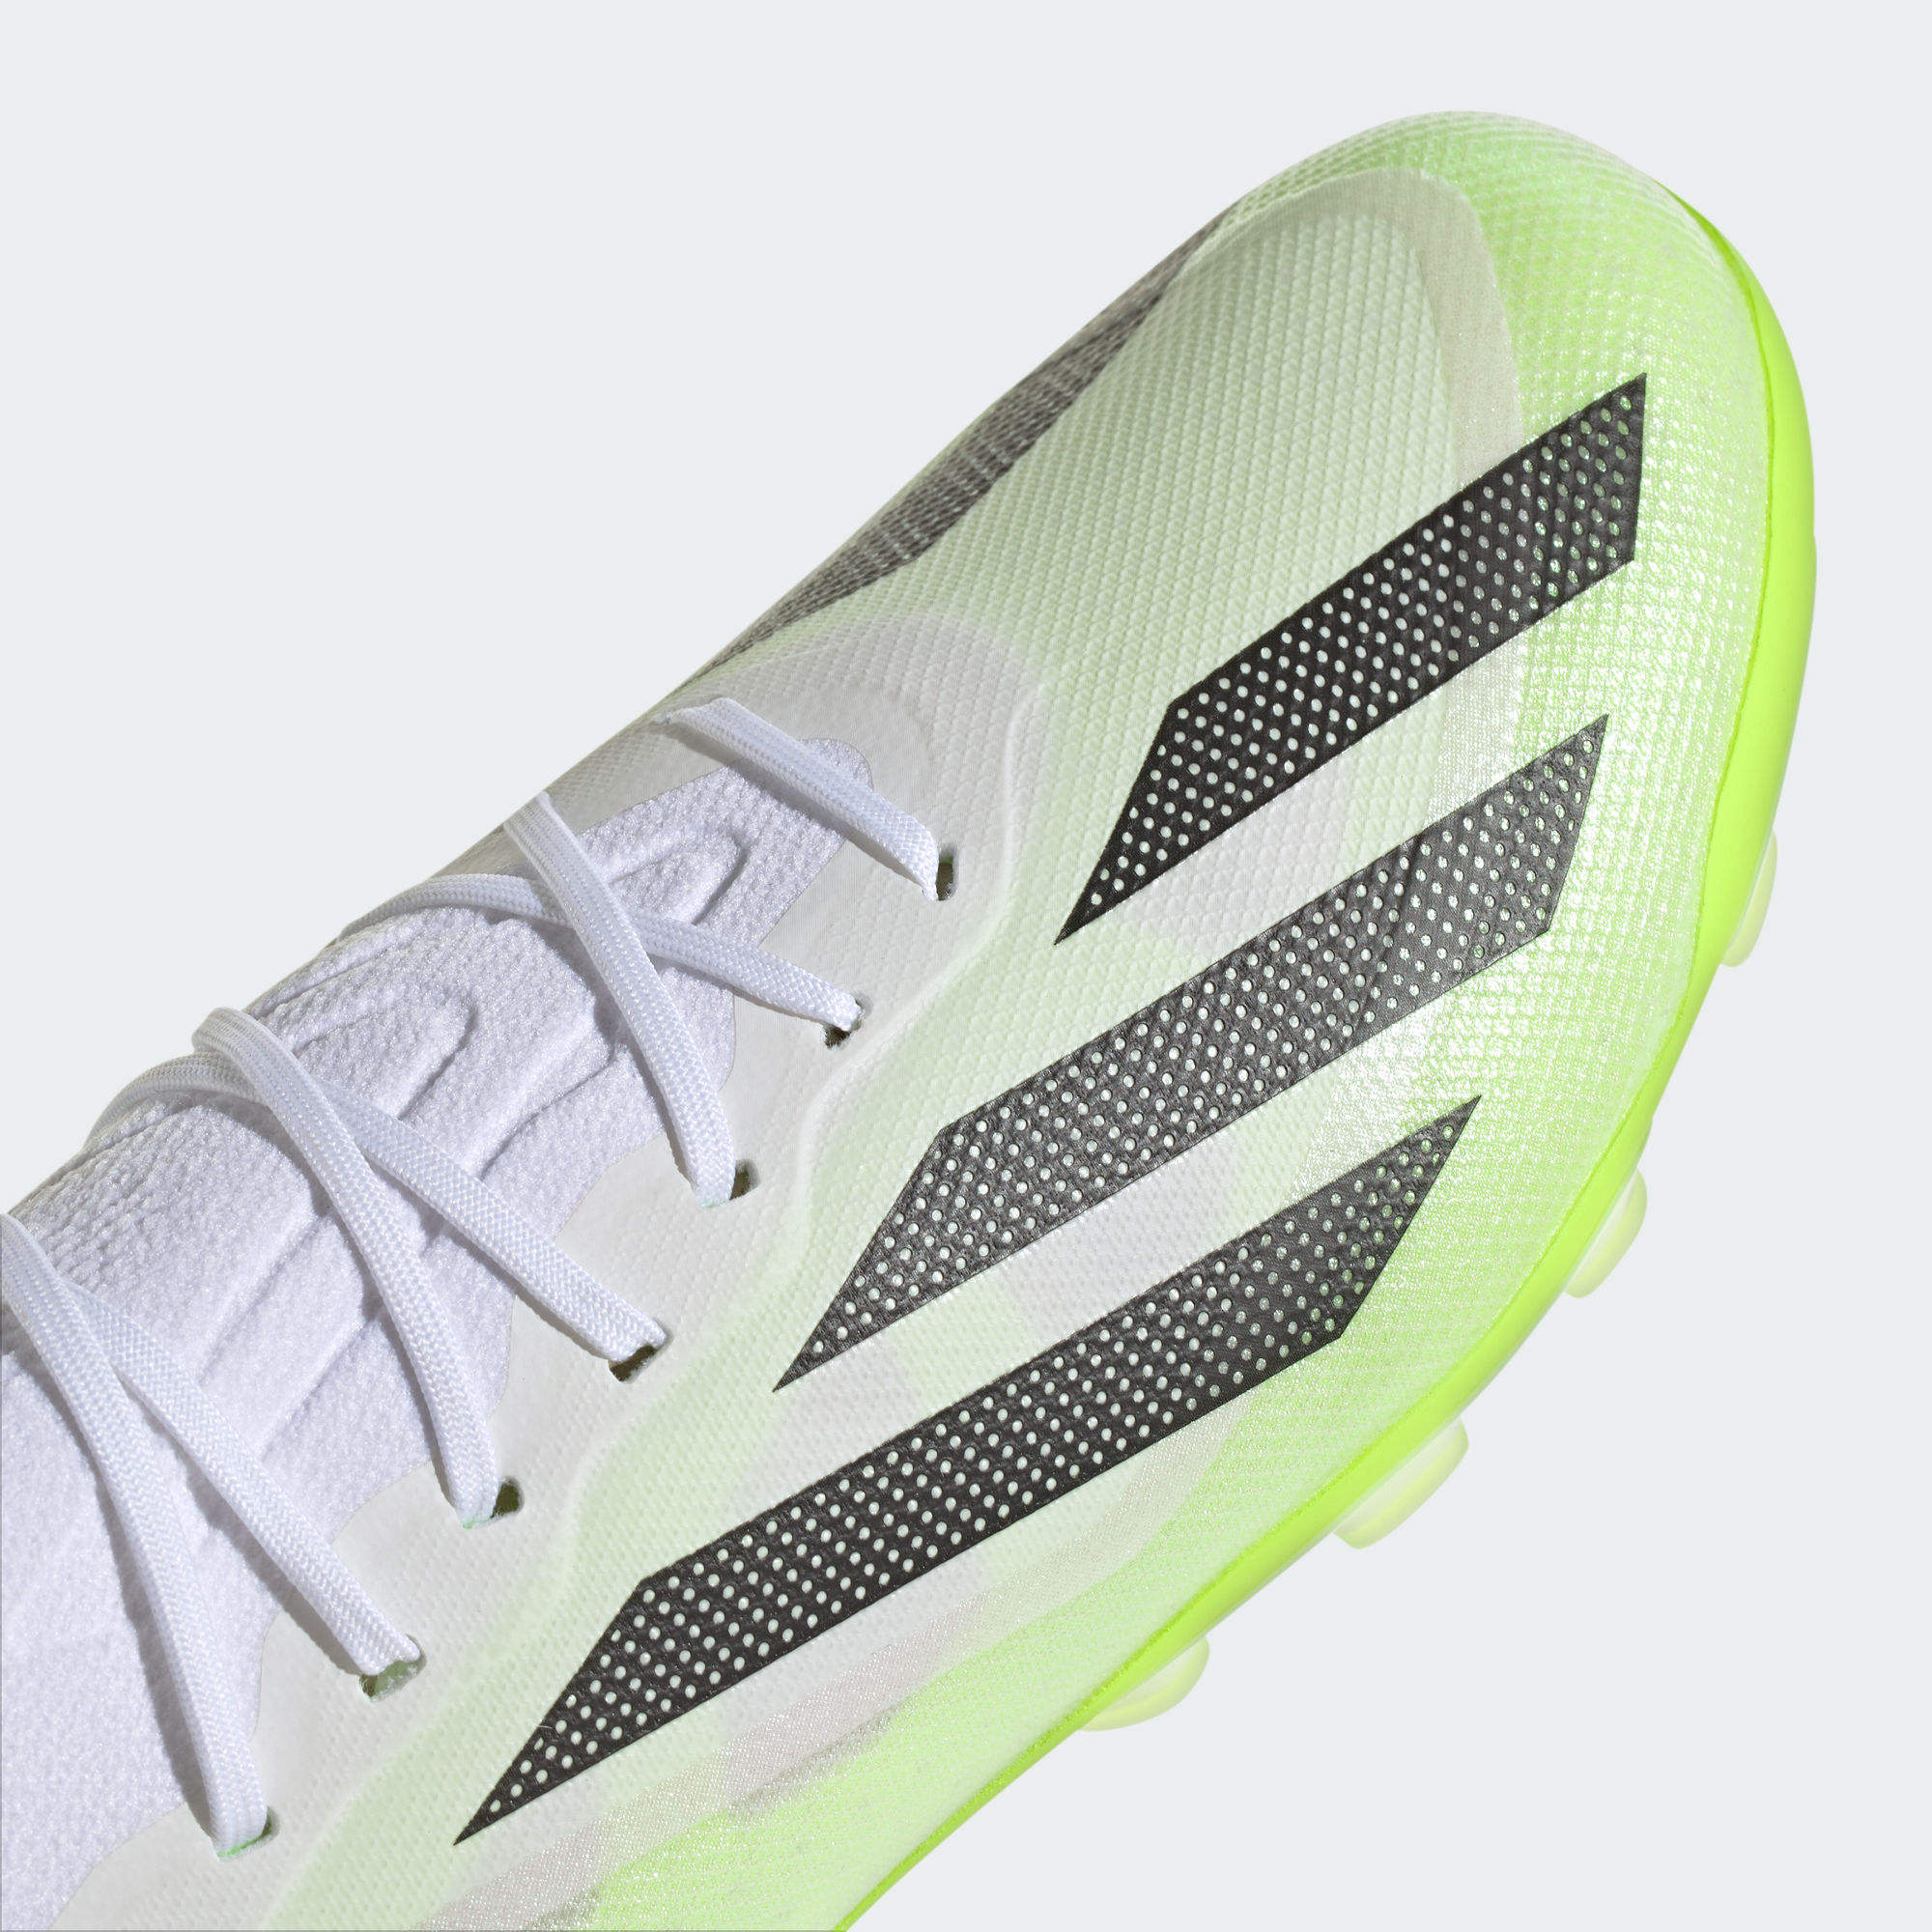 X CRAZYFAST.1 人造草地足球球靴- 白色| 男子| adidas(愛迪達)香港官方